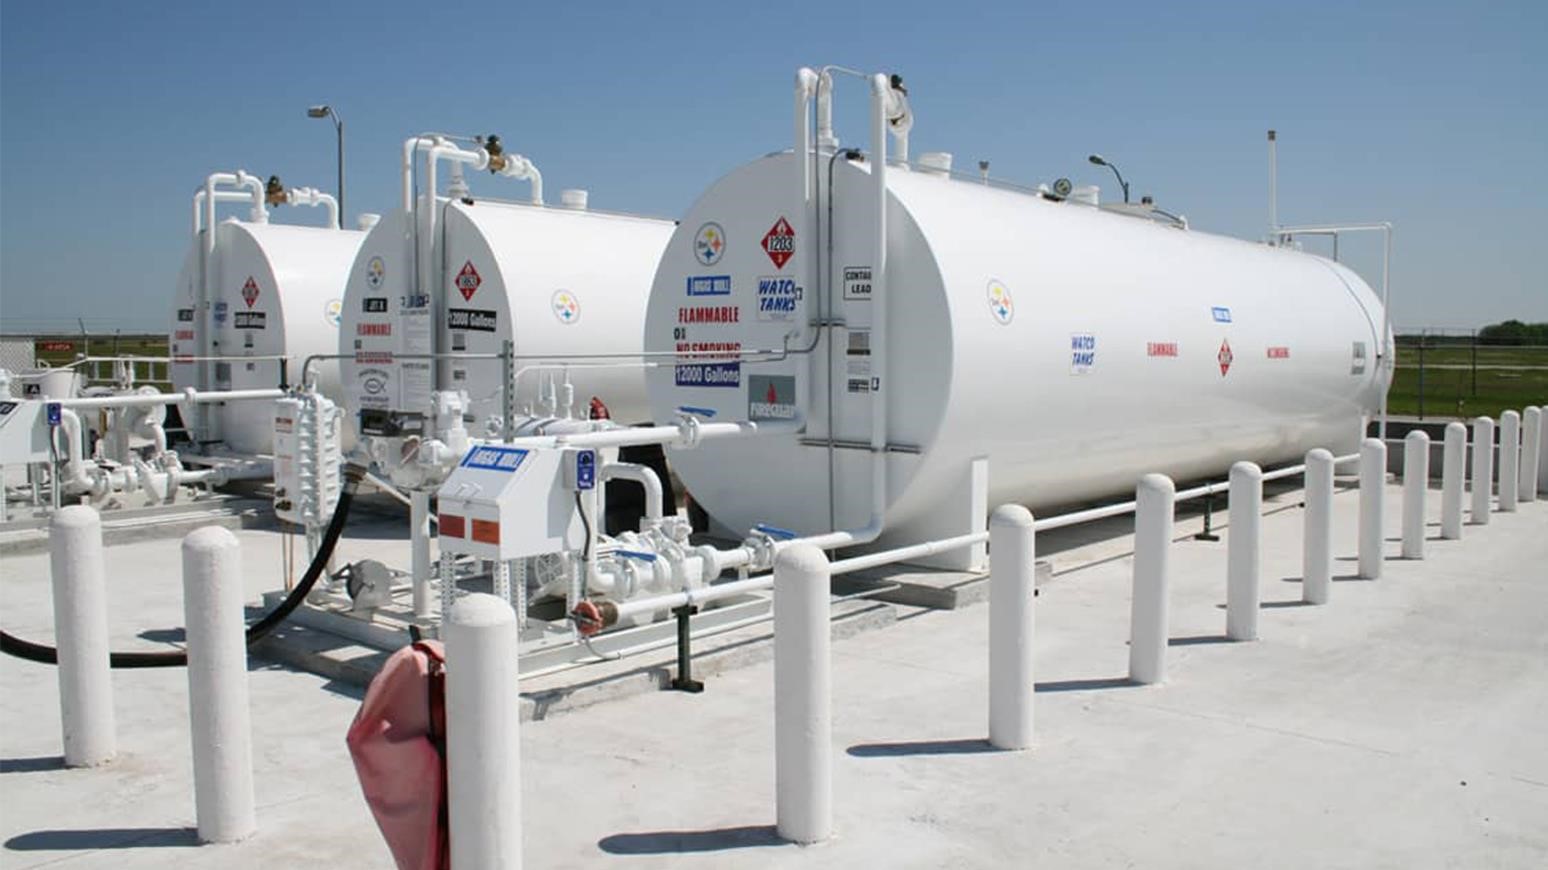 Commercial Fuel Storage Tanks